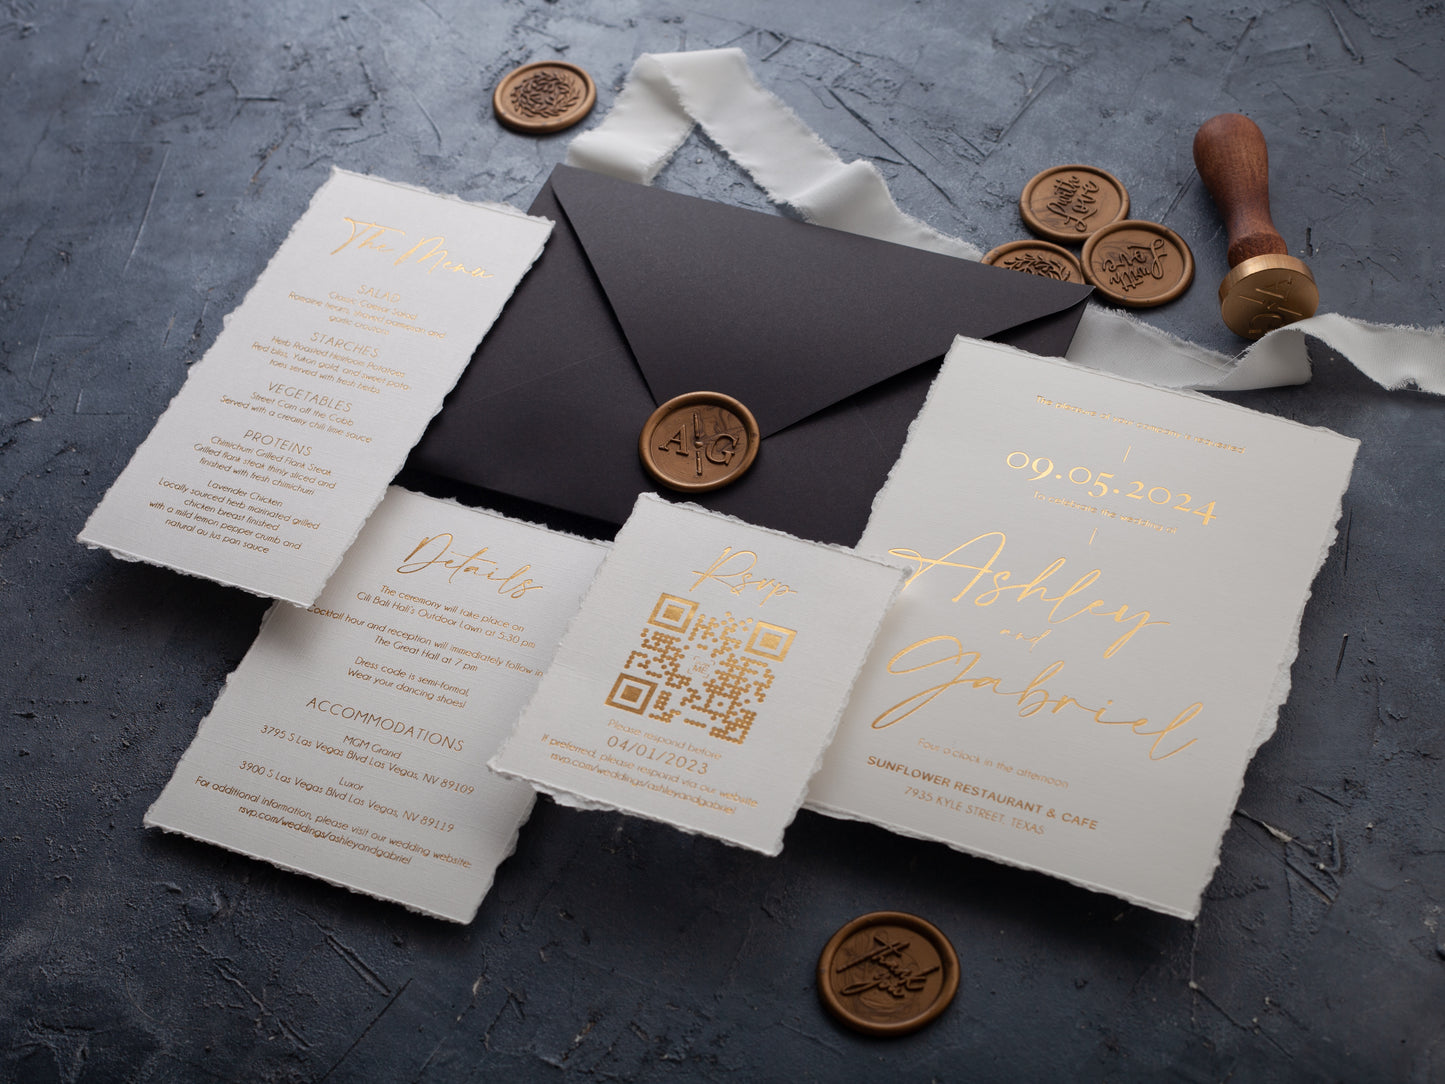 Deckled edge wedding invitation set with gold foil print